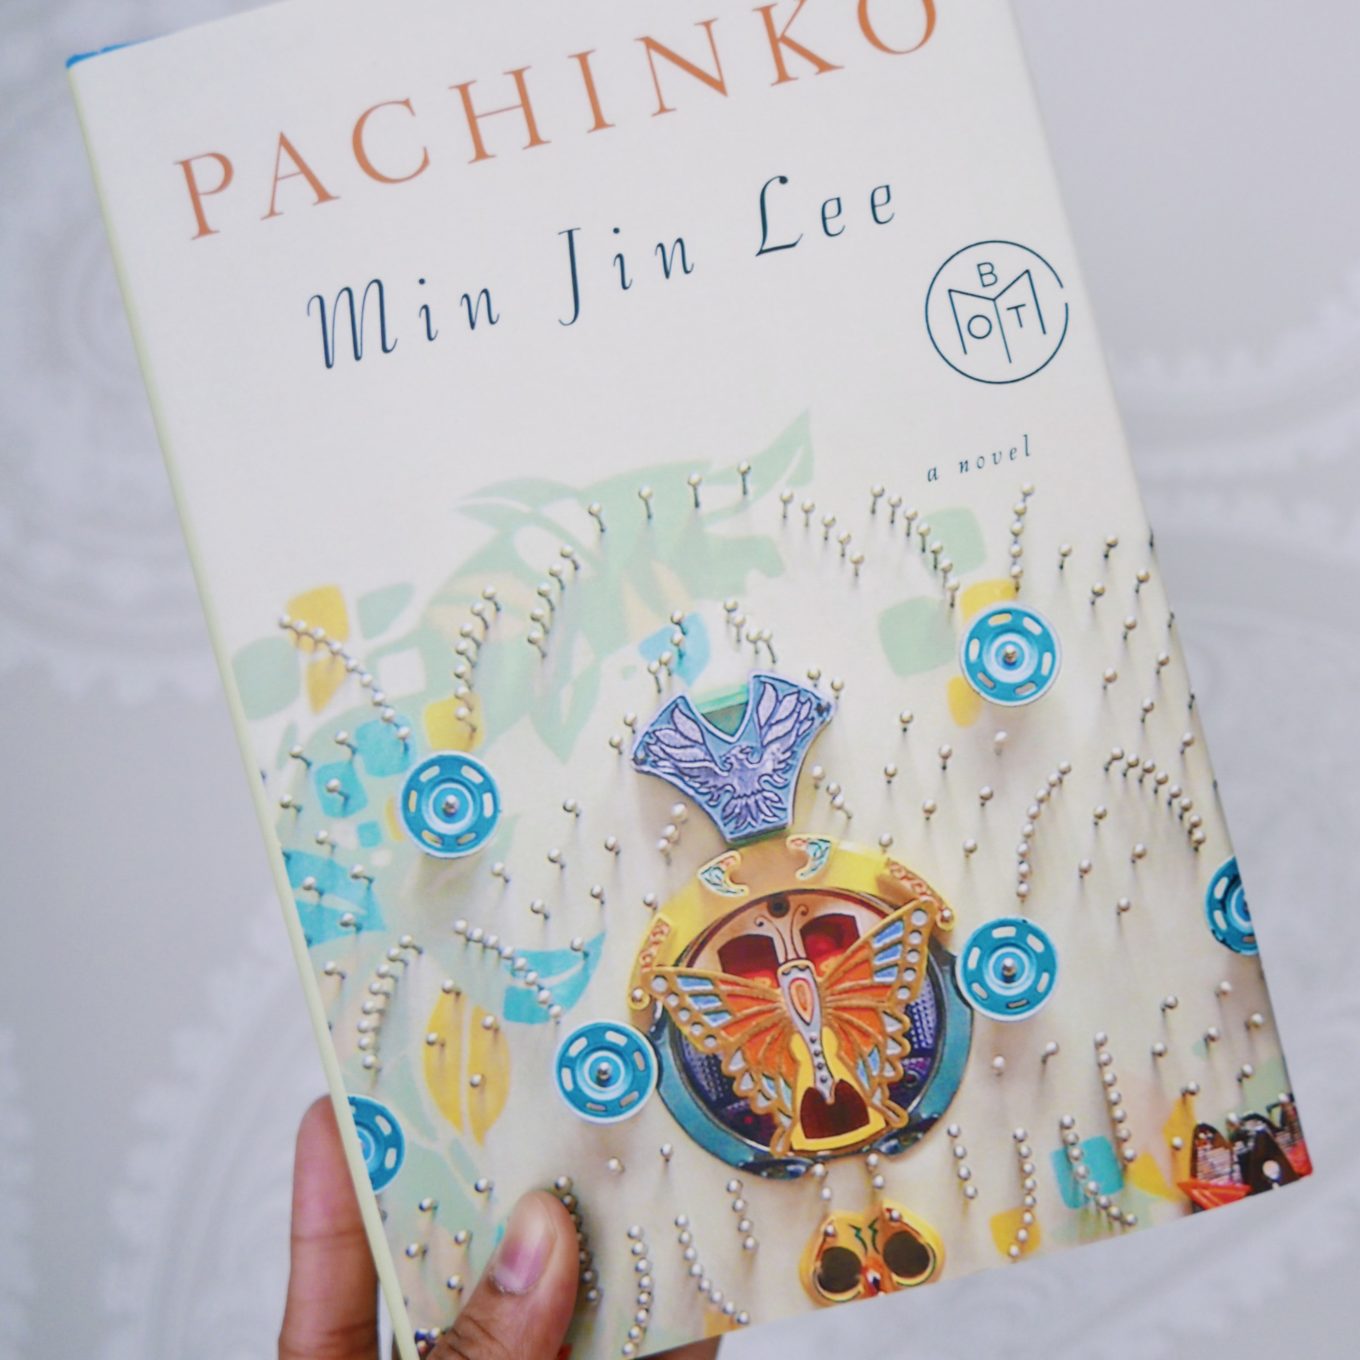 pachinko reviews book